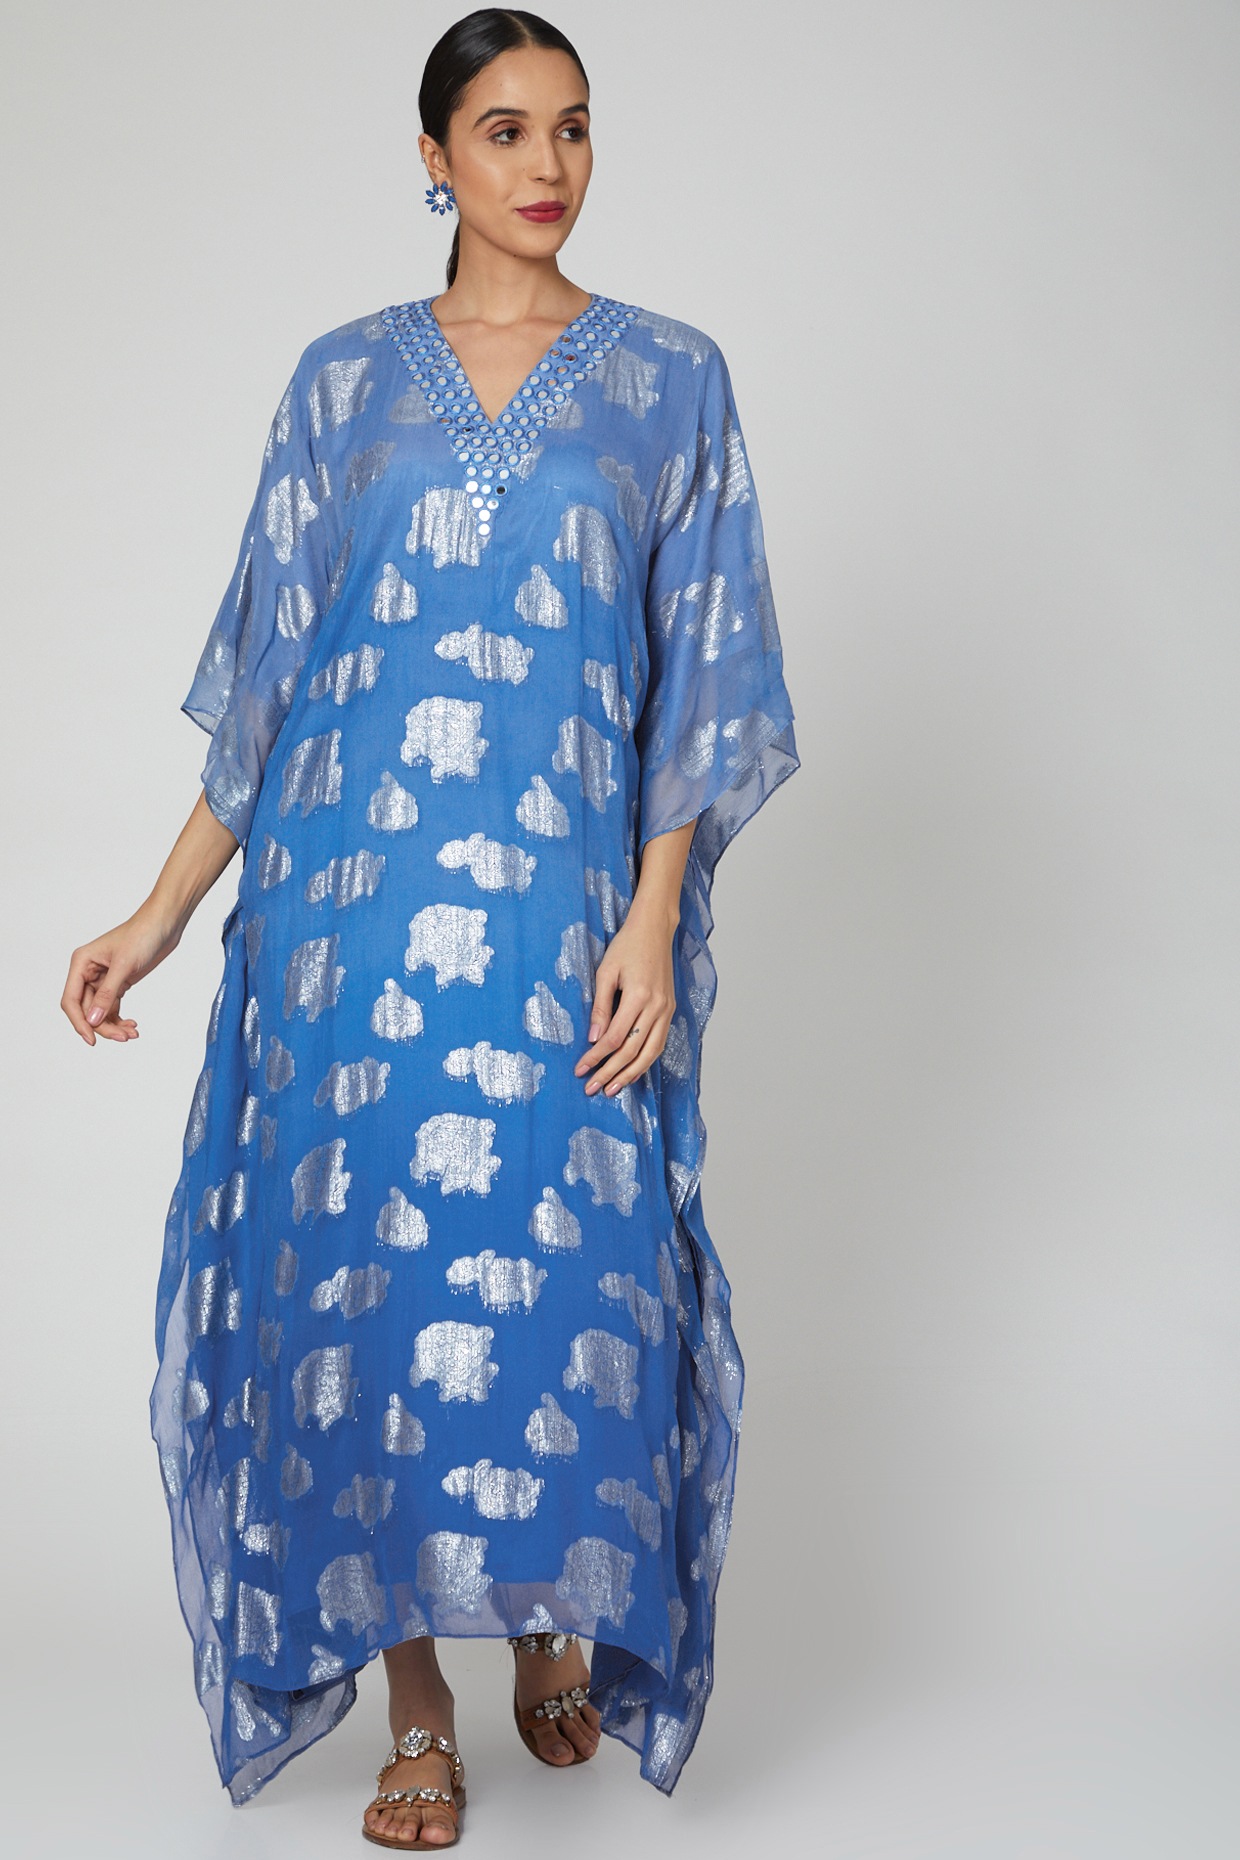 Sexy Honeymoon Blue Babydoll Lingerie Bikini Dress B41n at Rs 999.00 |  लिंगेरी - Aceann Lifestyle Private Limited, Noida | ID: 2852124272655